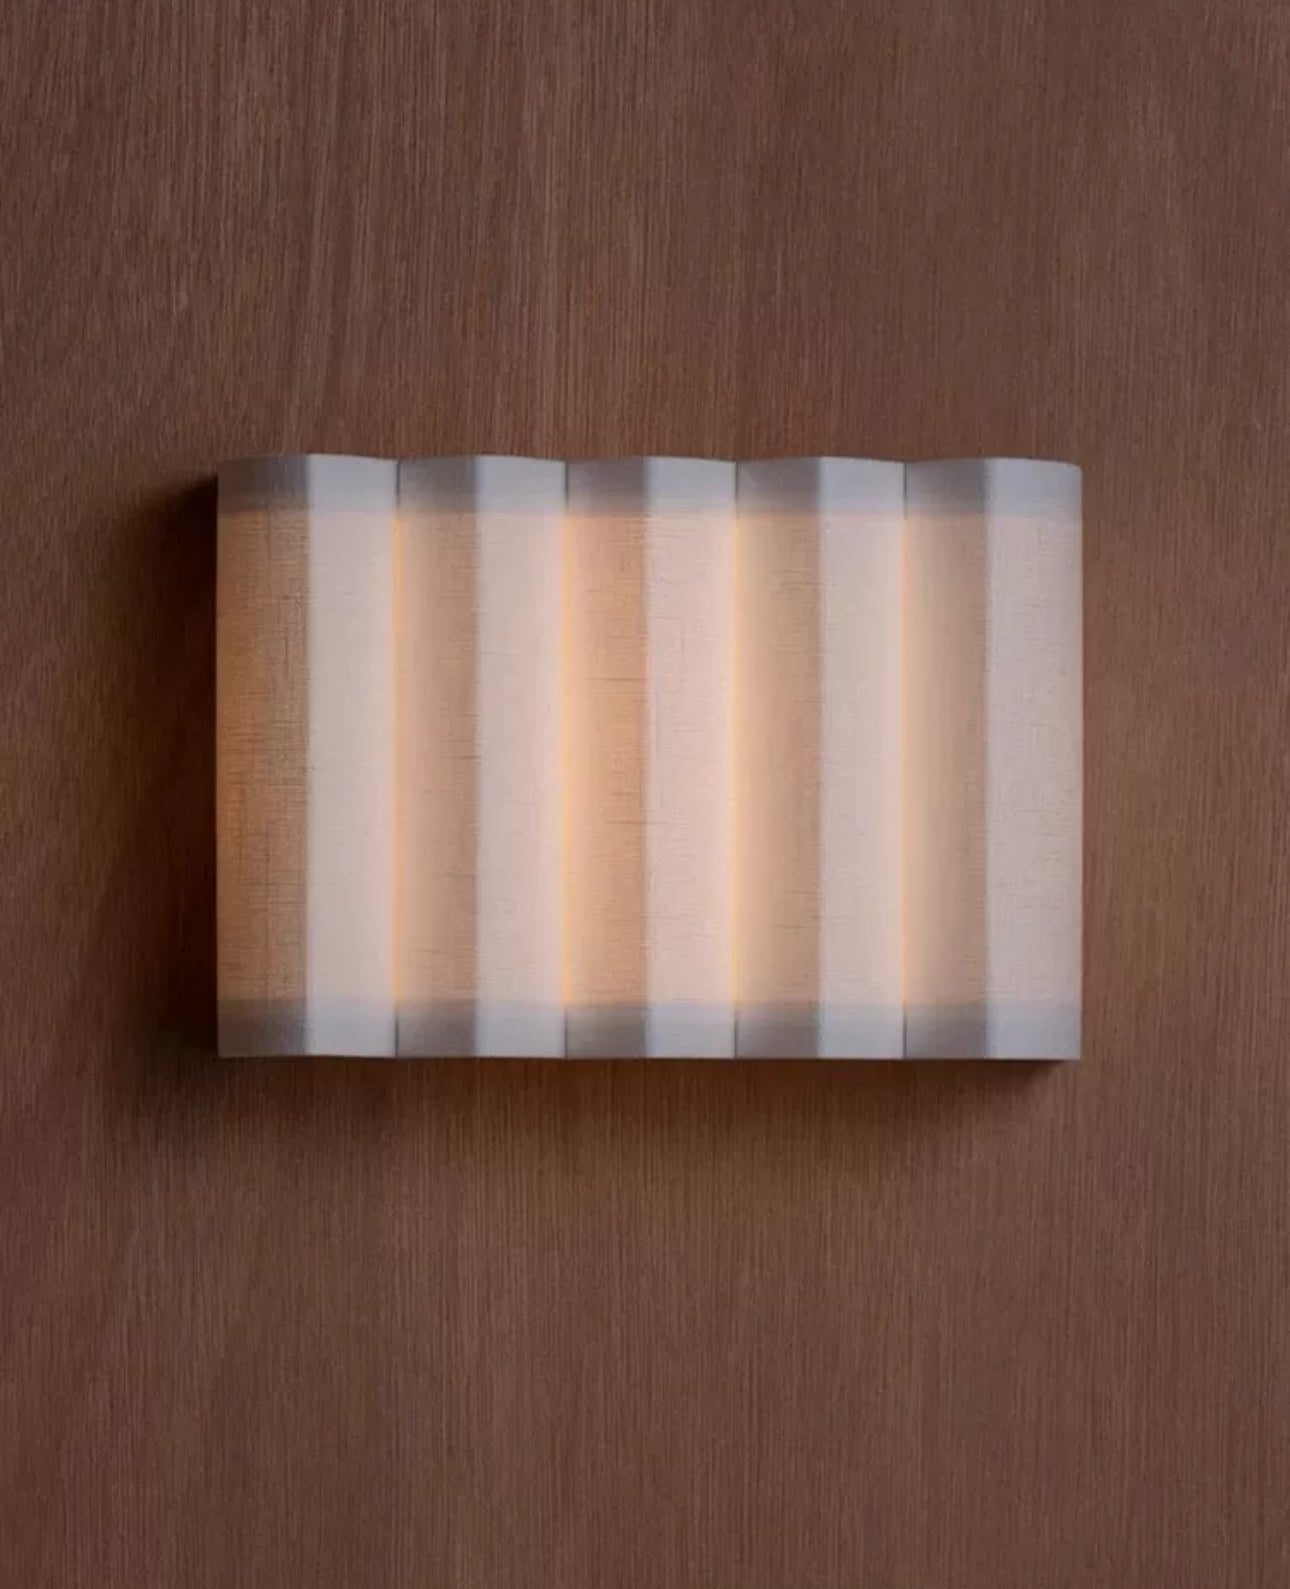 Japandi Wall Lamp - Wave Design Warm Light Iron And Fabric 25cm x 18cm Csa Ul Listed Ce - Minimalist Lamps